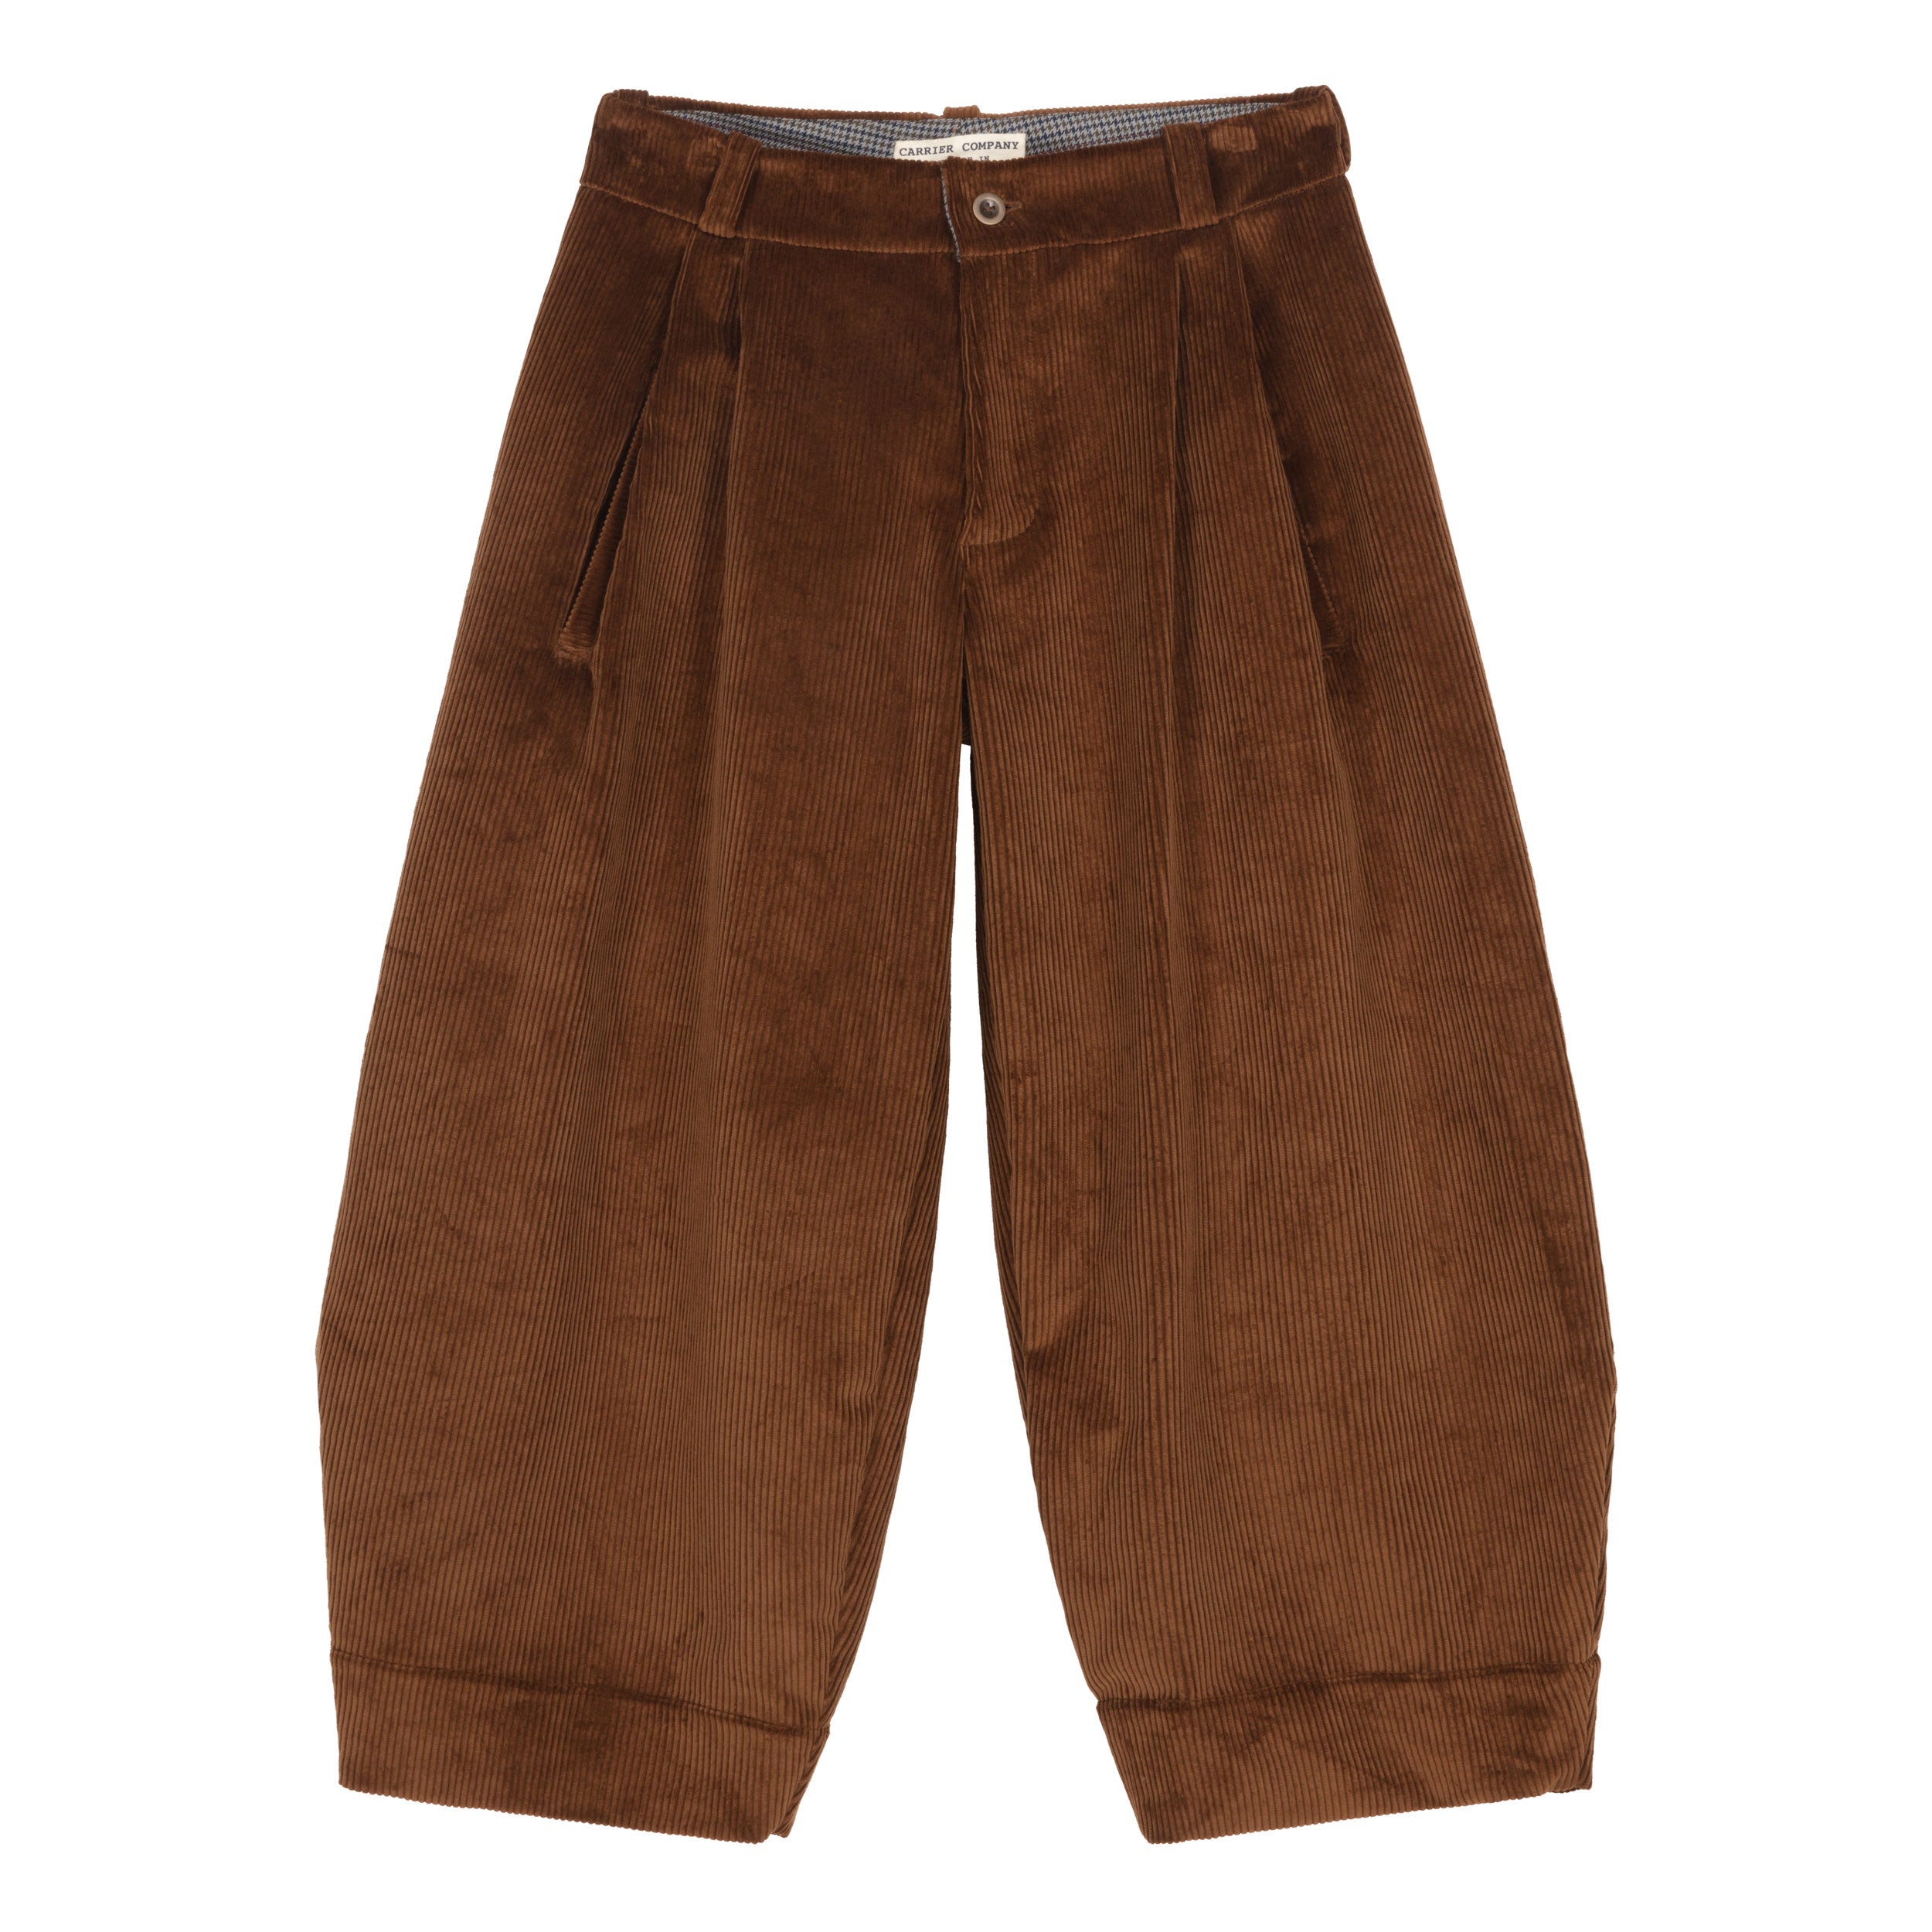 Dutch Trouser in Light Brown Corduroy *